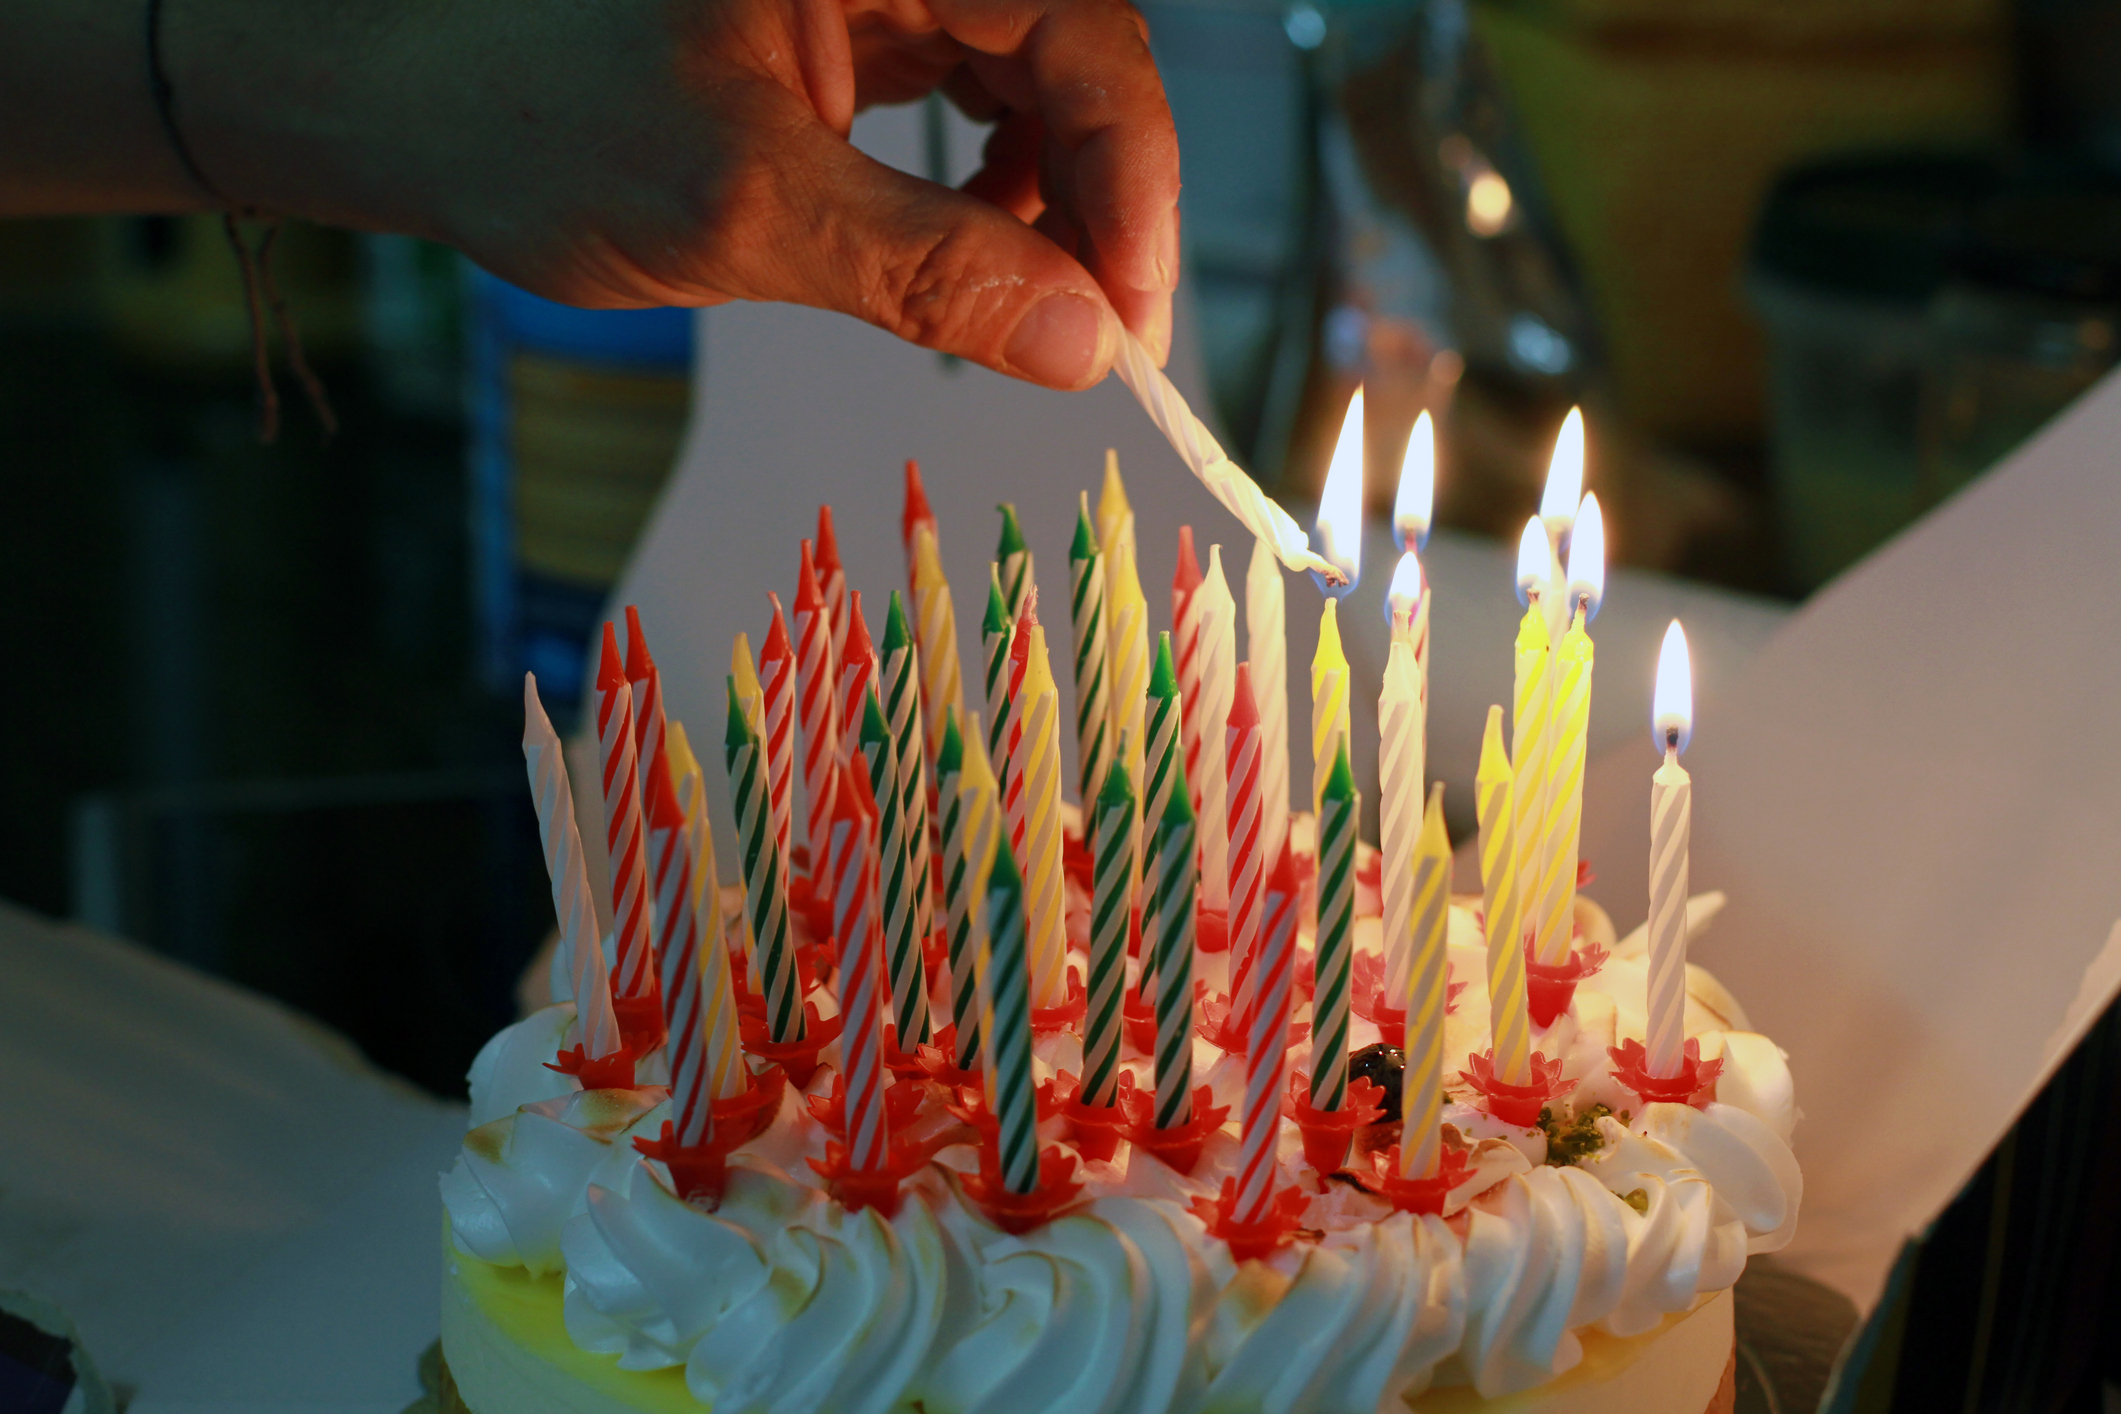 Hand burning candles on birthday cake